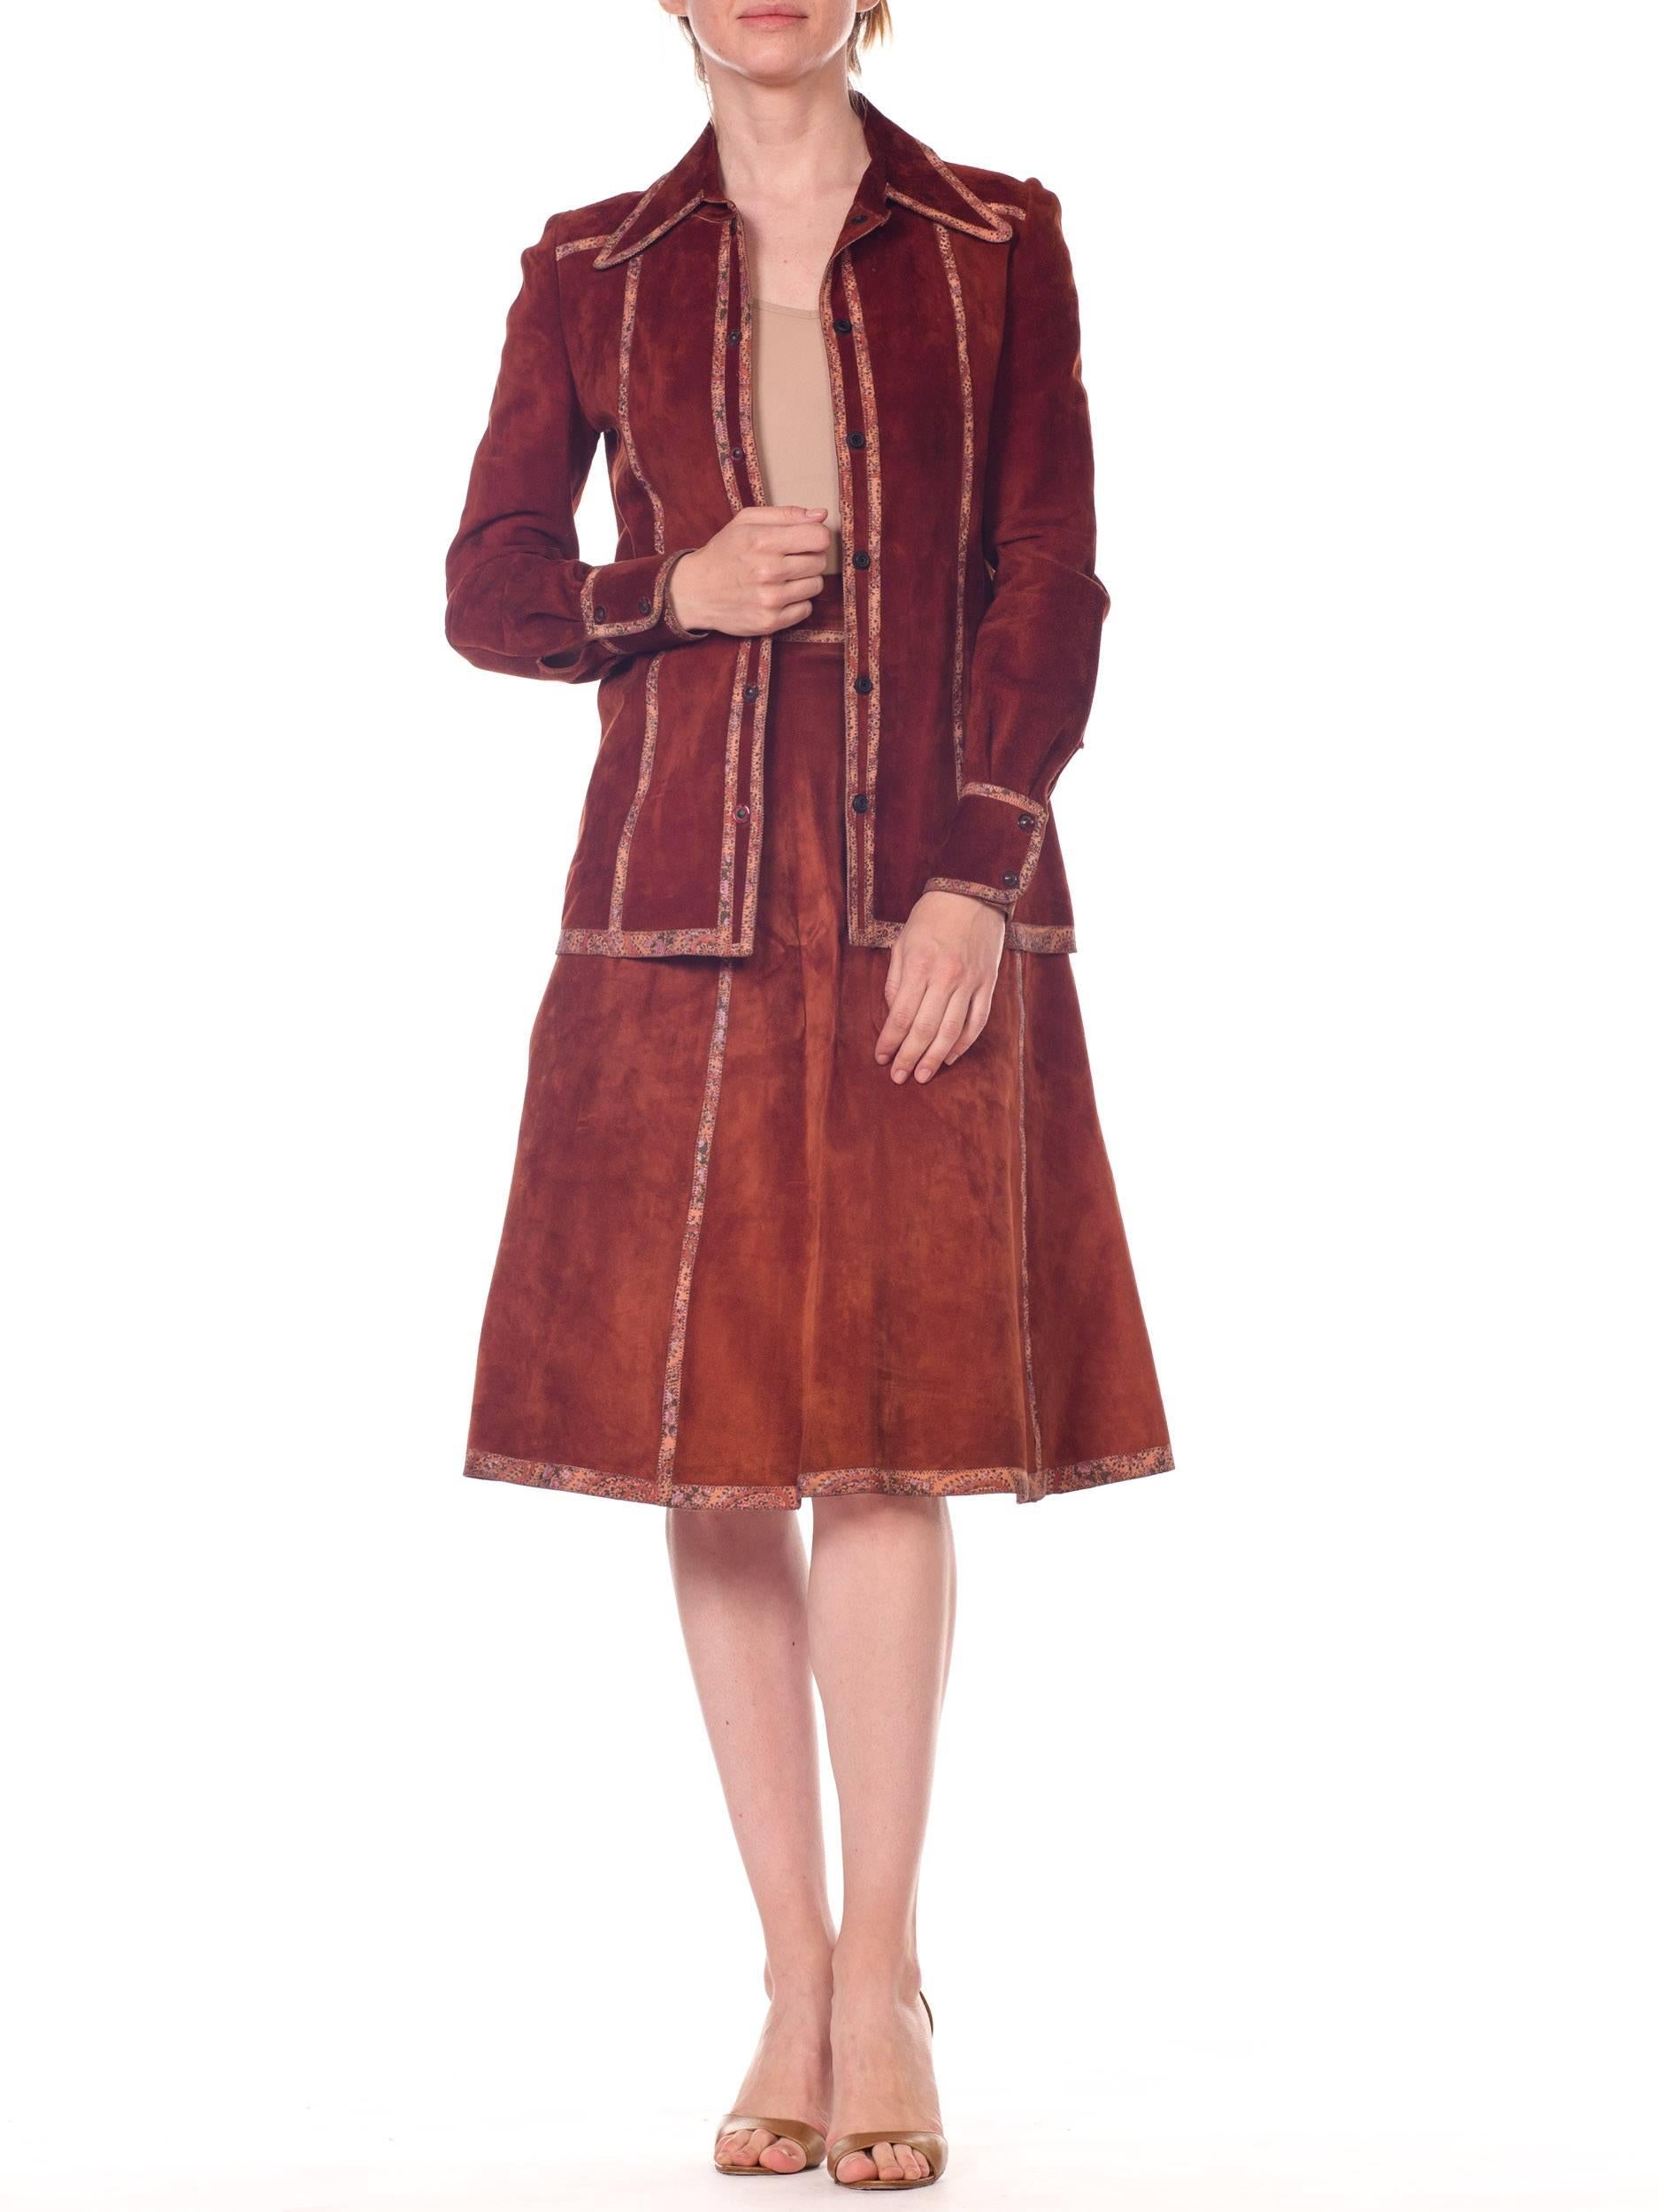 Roberto Cavalli Cognac Suede with Print Panels Jacket and Skirt Set 2